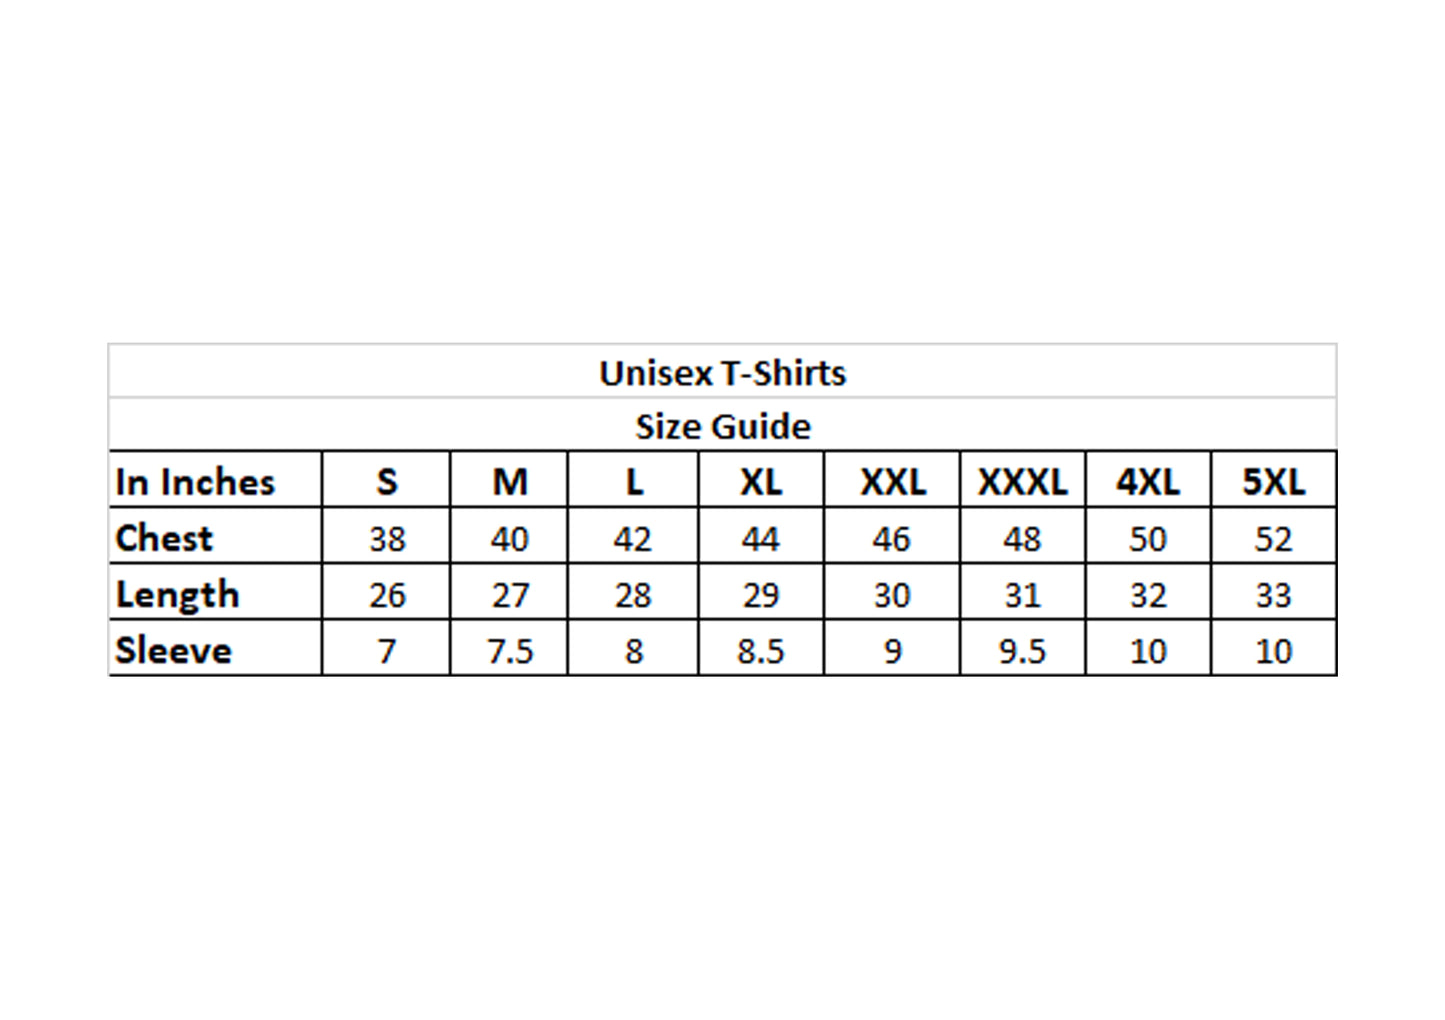 LADONIA Seasons Unisex T-Shirt (Charcoal Grey)